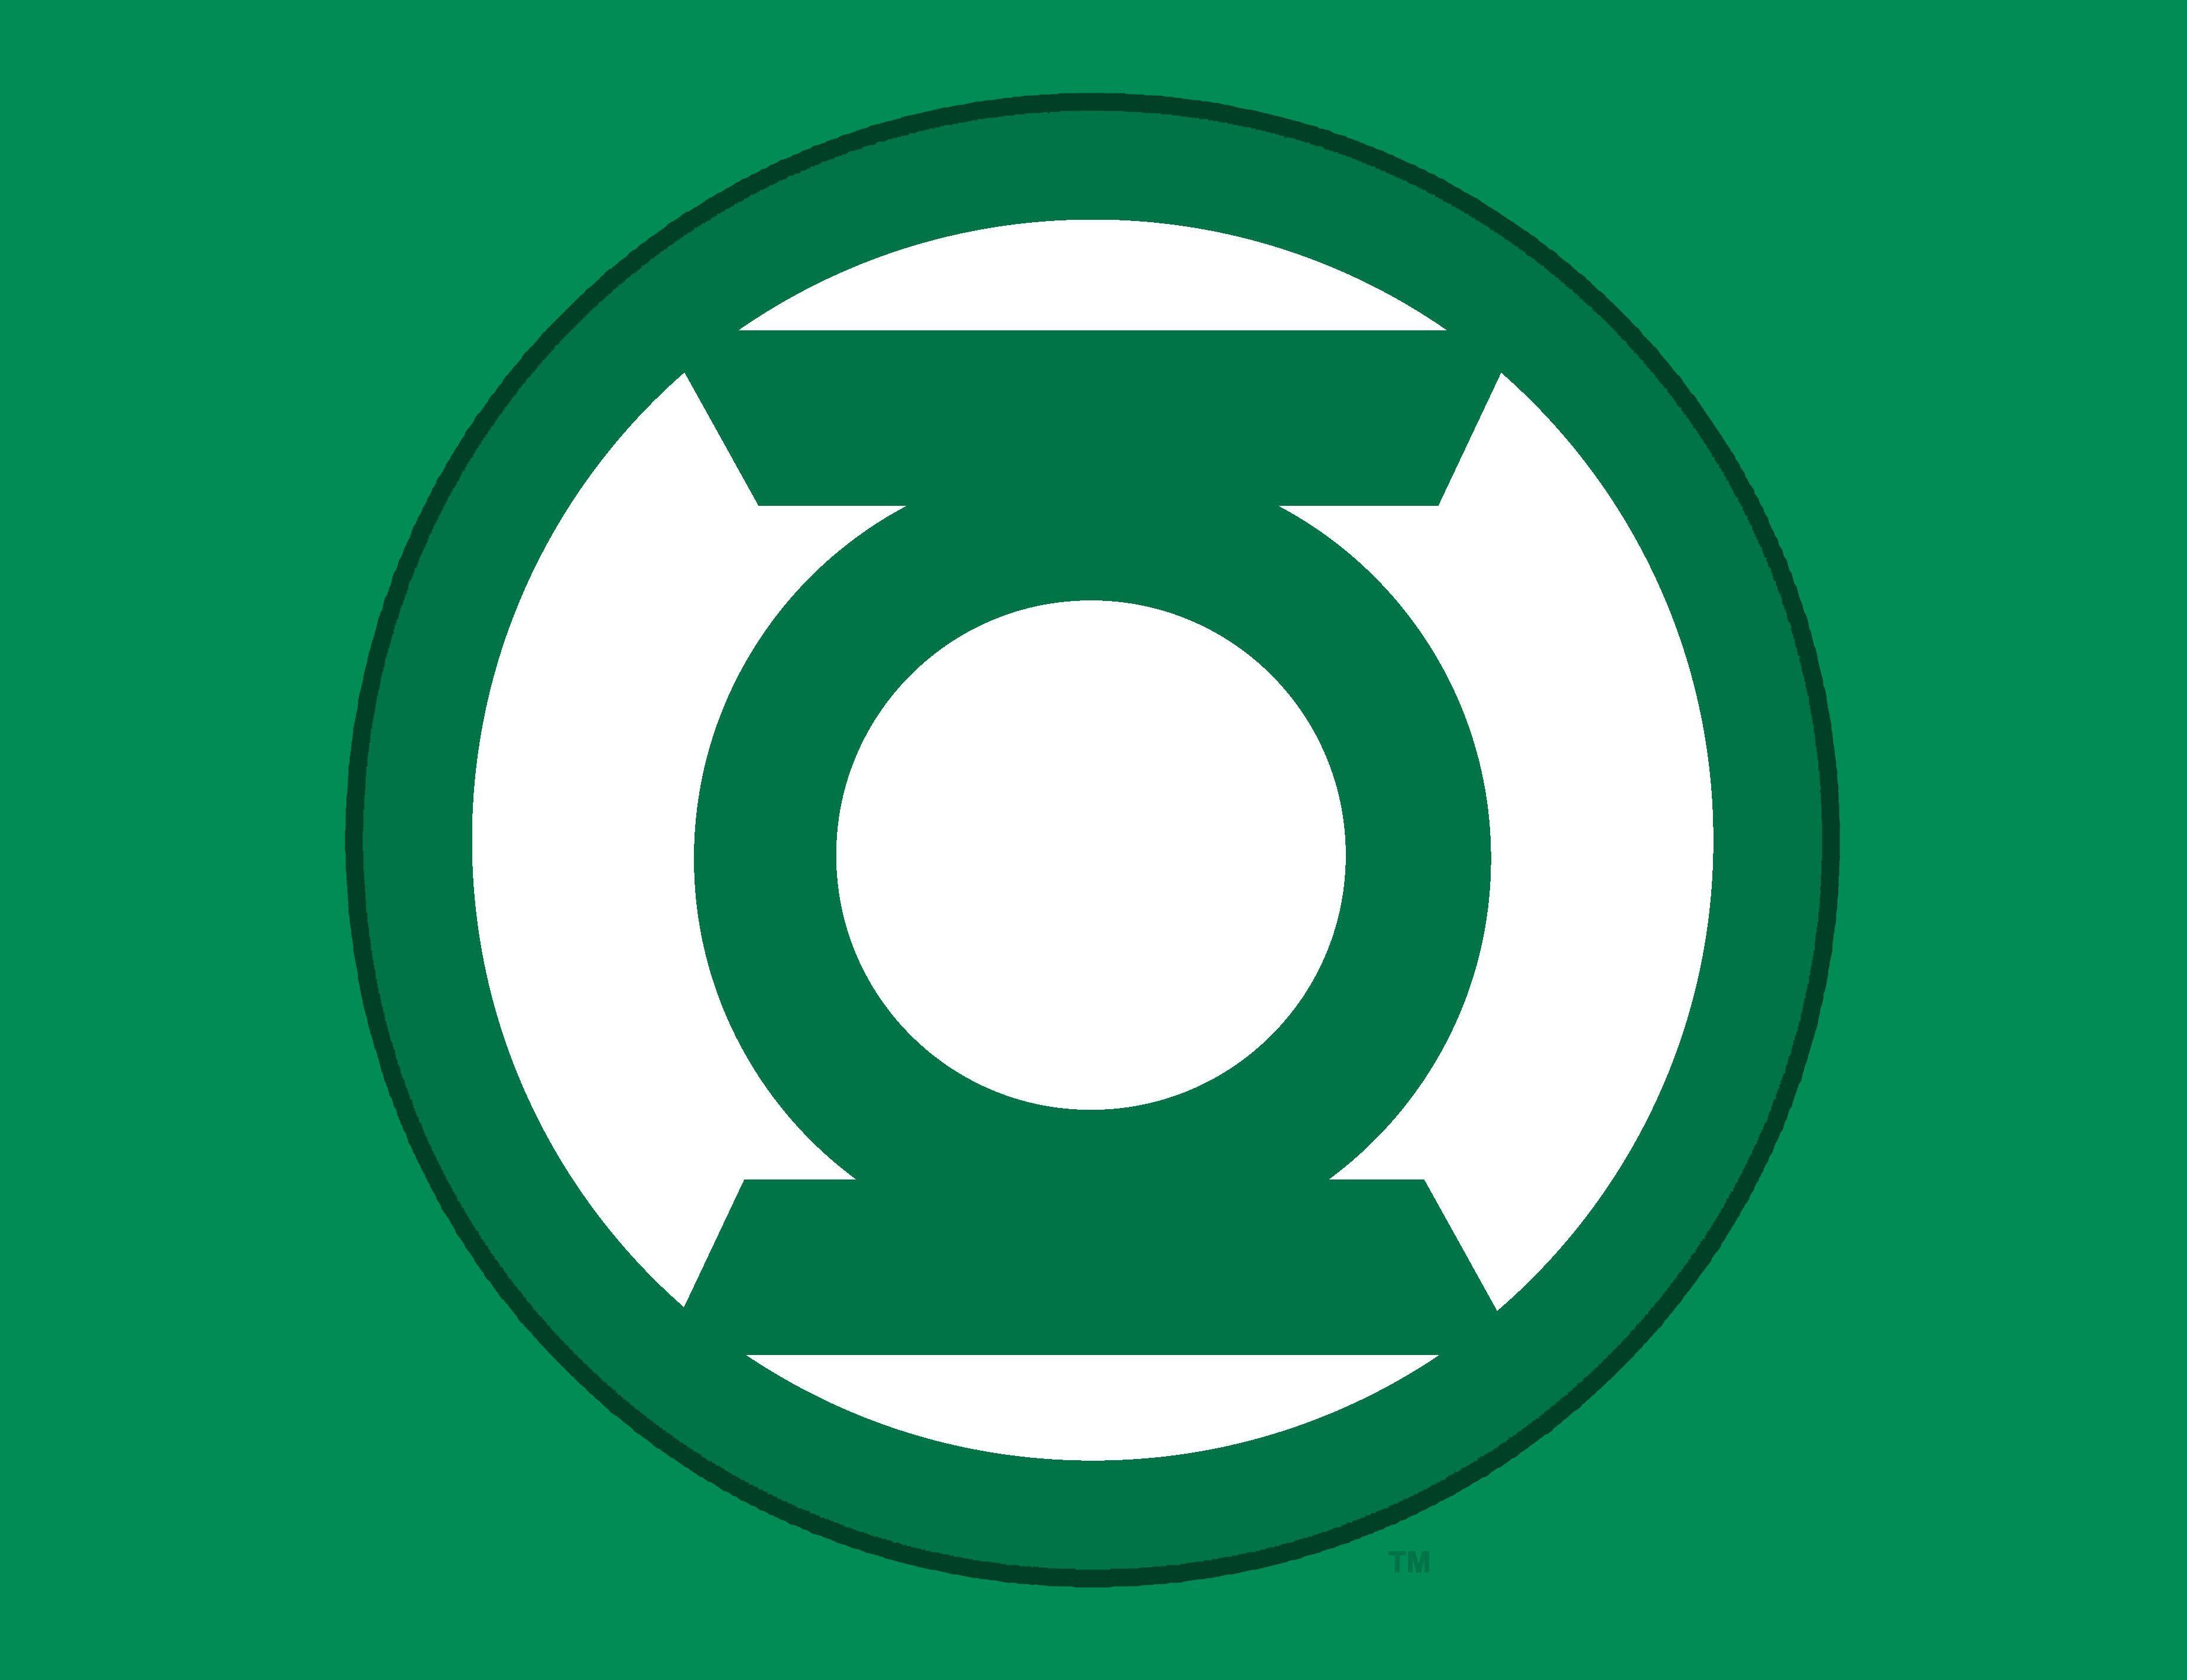 Green and White Logo - Green Lantern Logo, Green Lantern Symbol, Meaning, History and Evolution